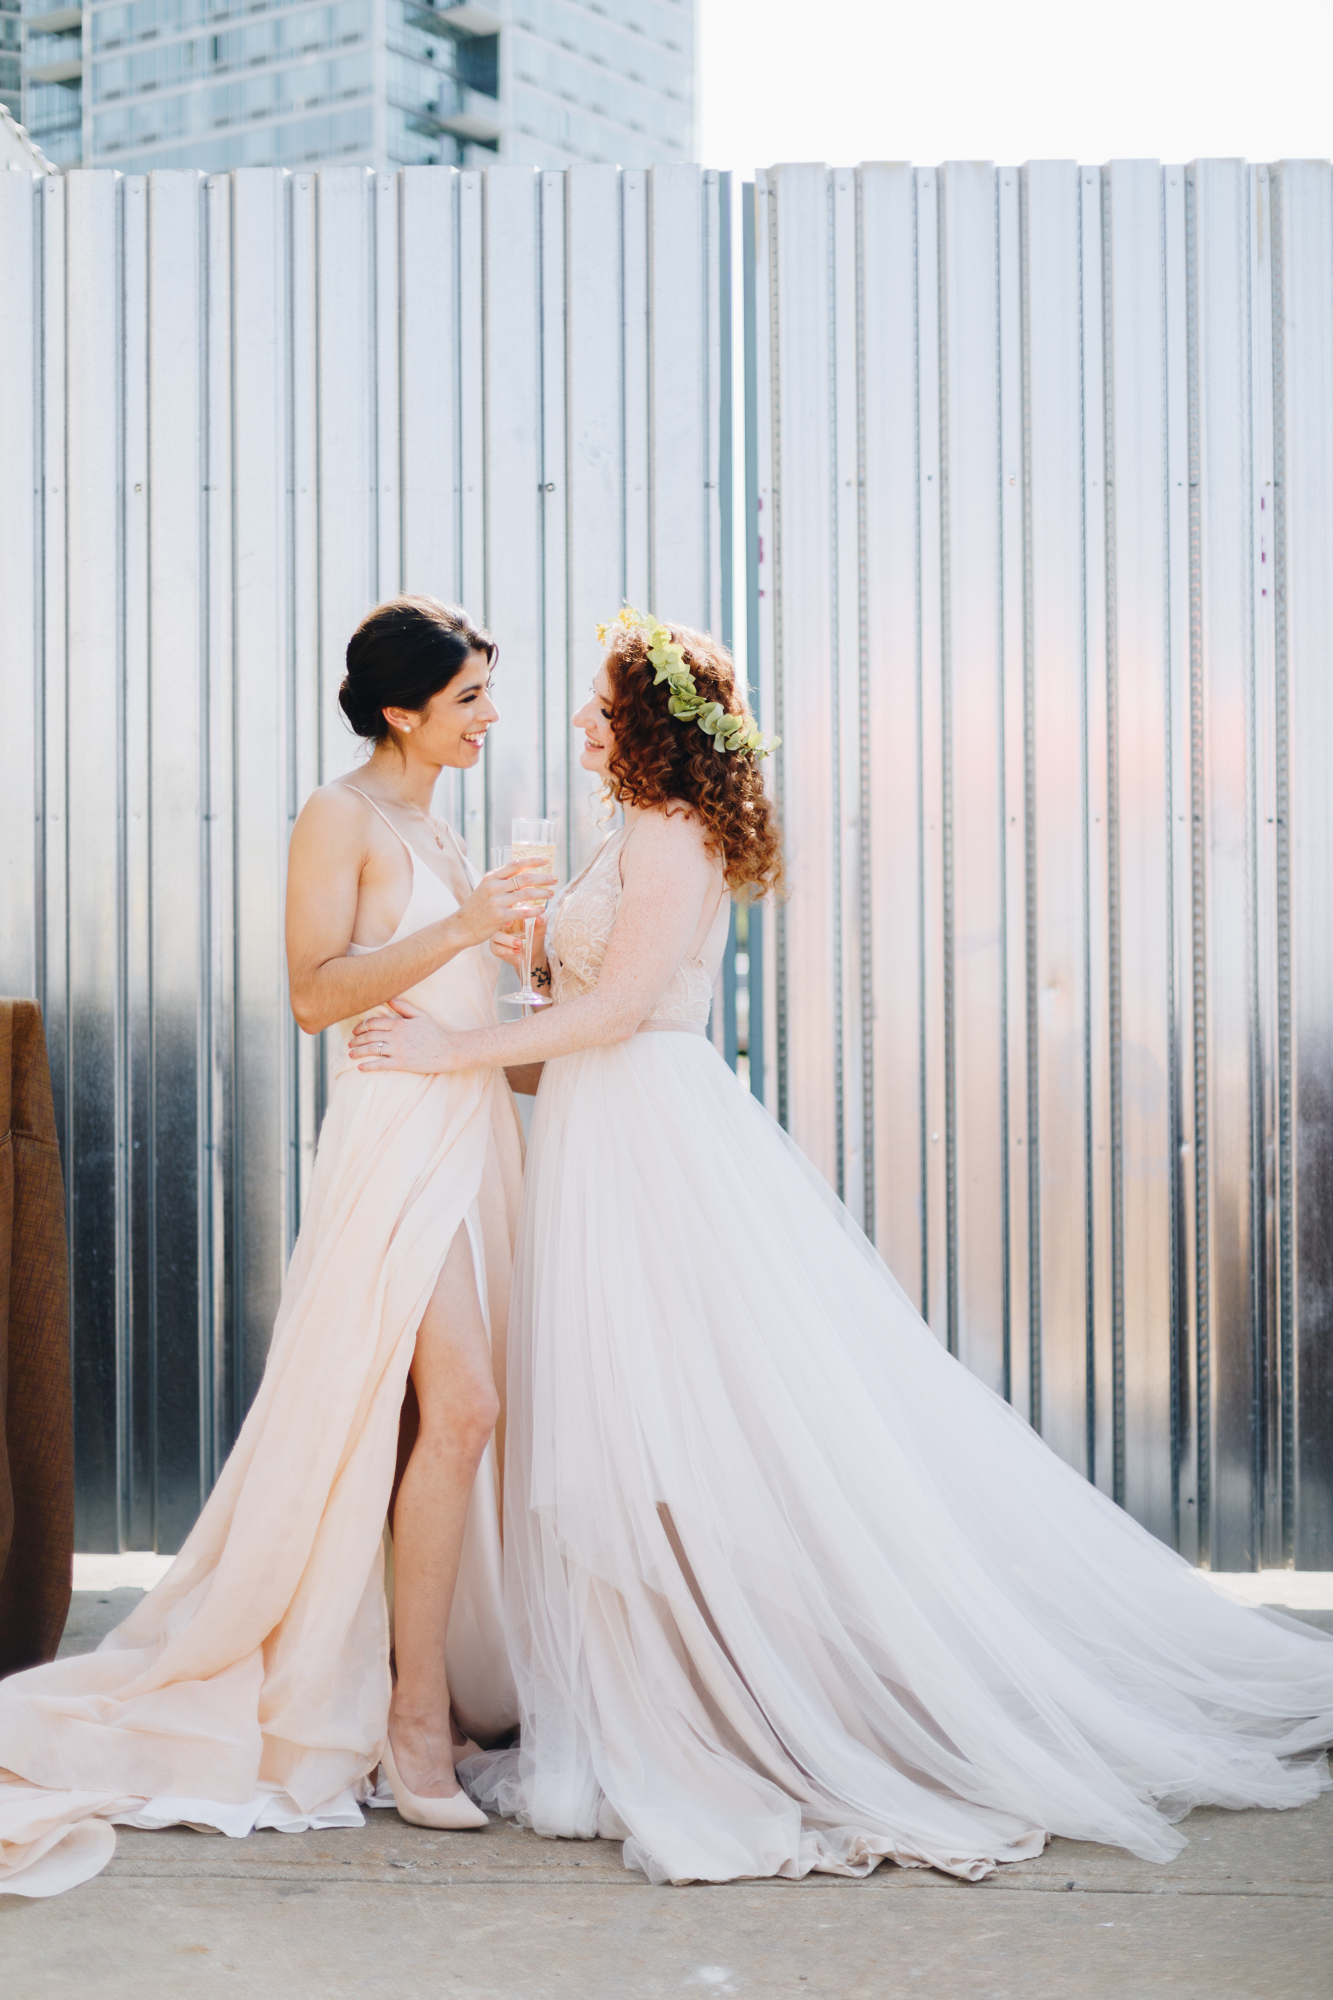 Pretty Radiant LGBTQ Wedding Inspiration at Sound River Studios